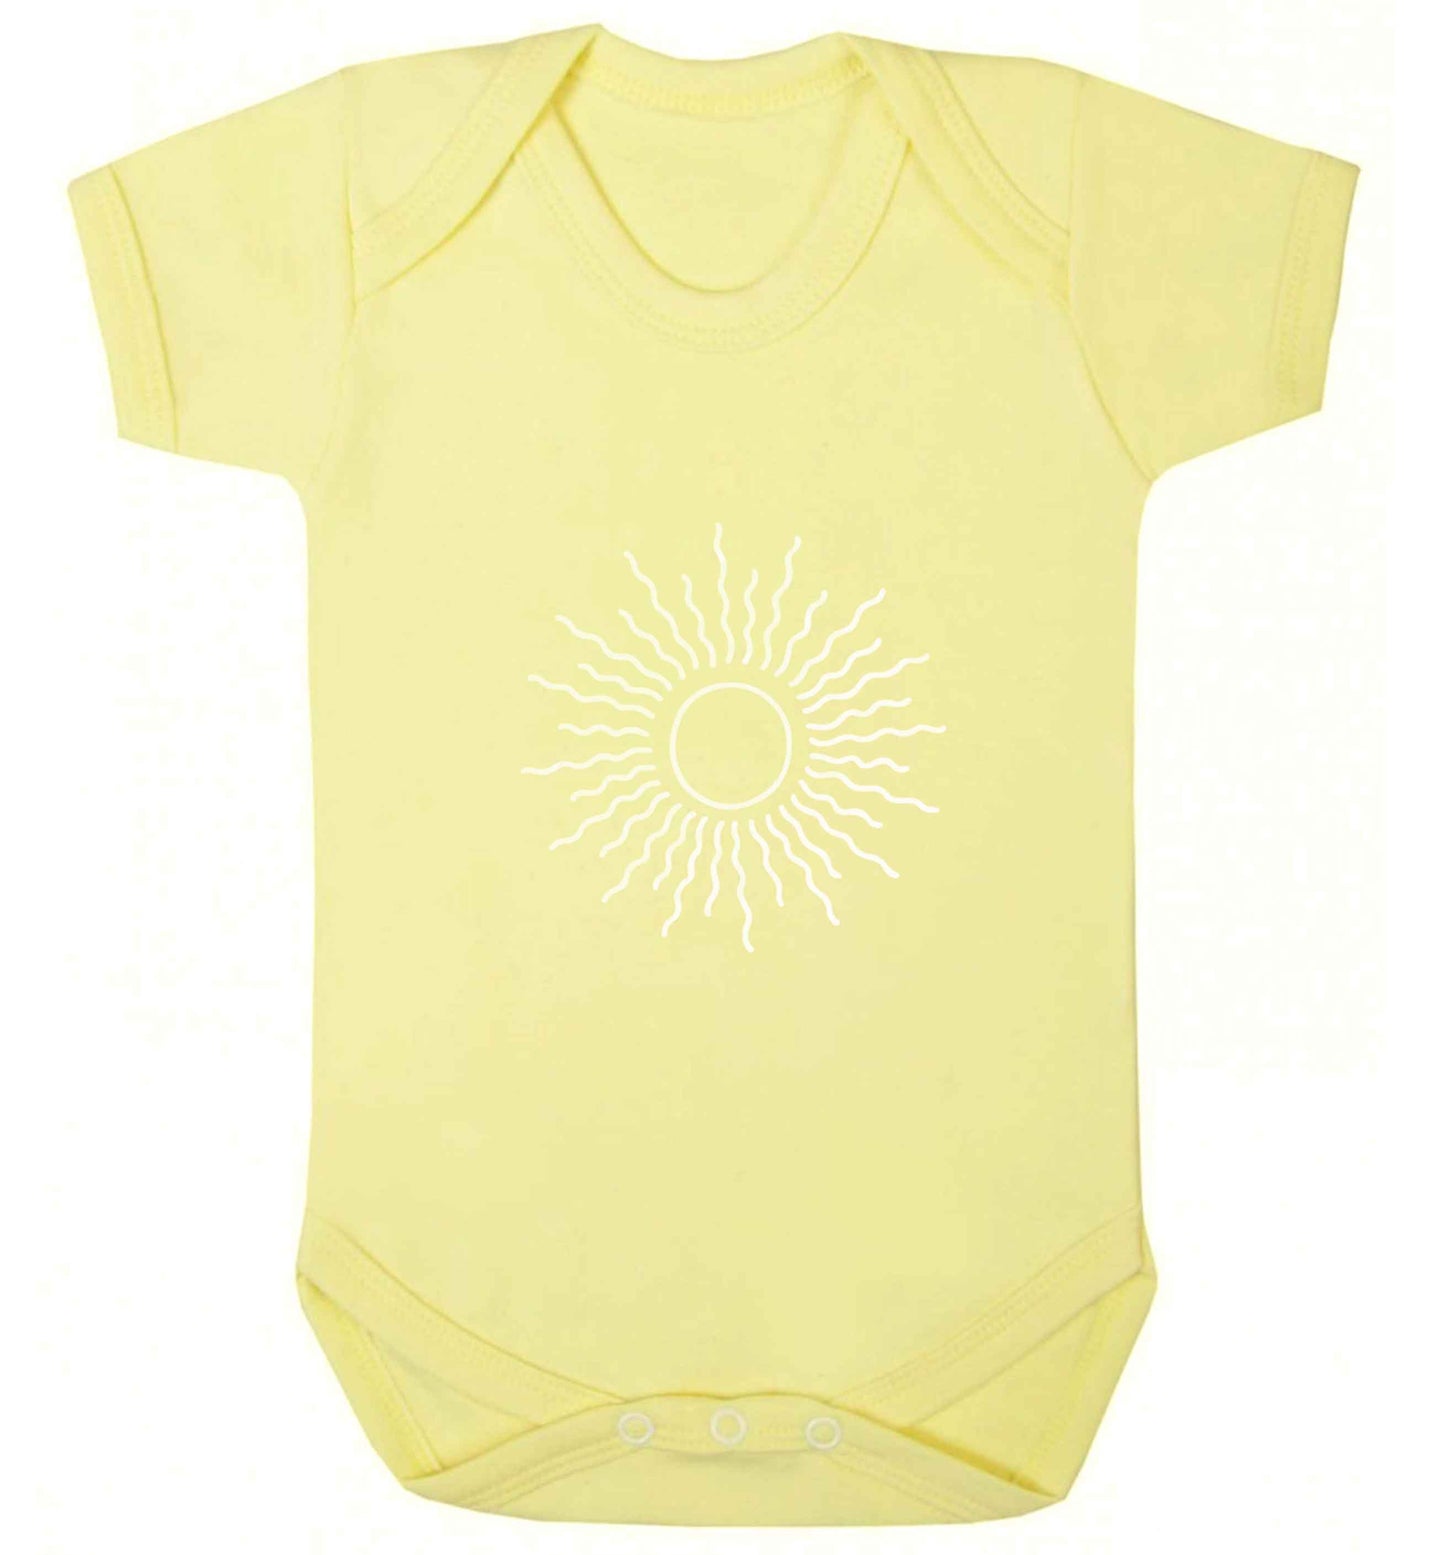 Sun illustration baby vest pale yellow 18-24 months